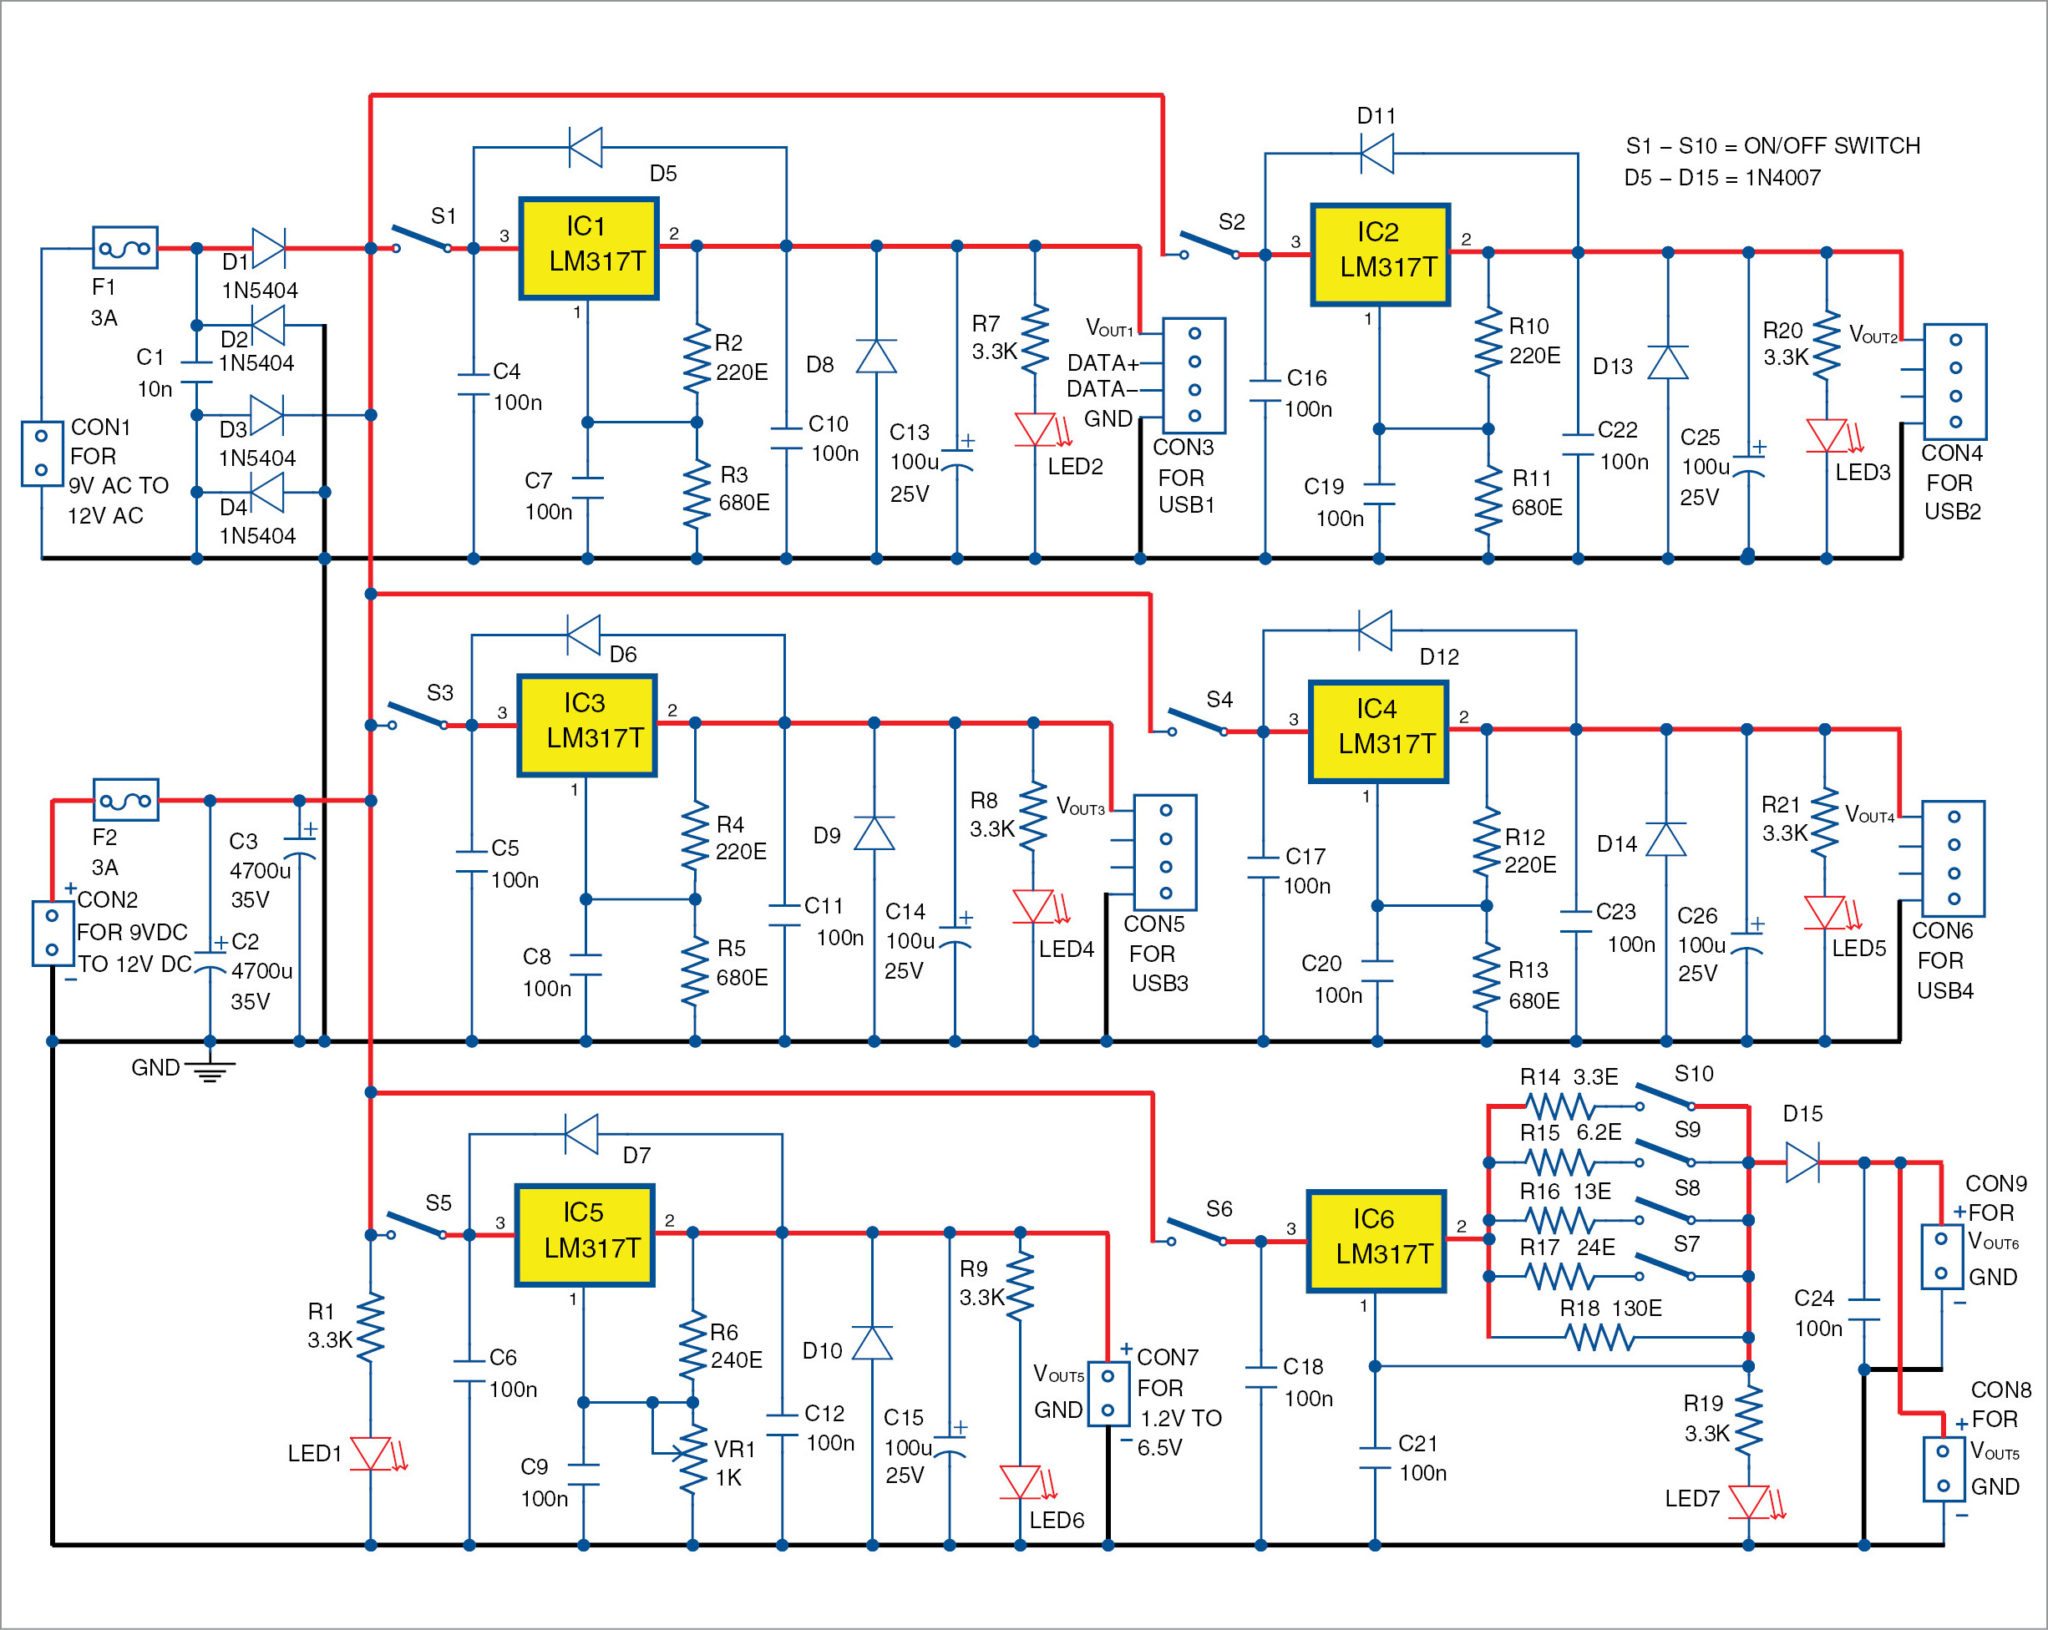 Circuit diagram of the power supply hub